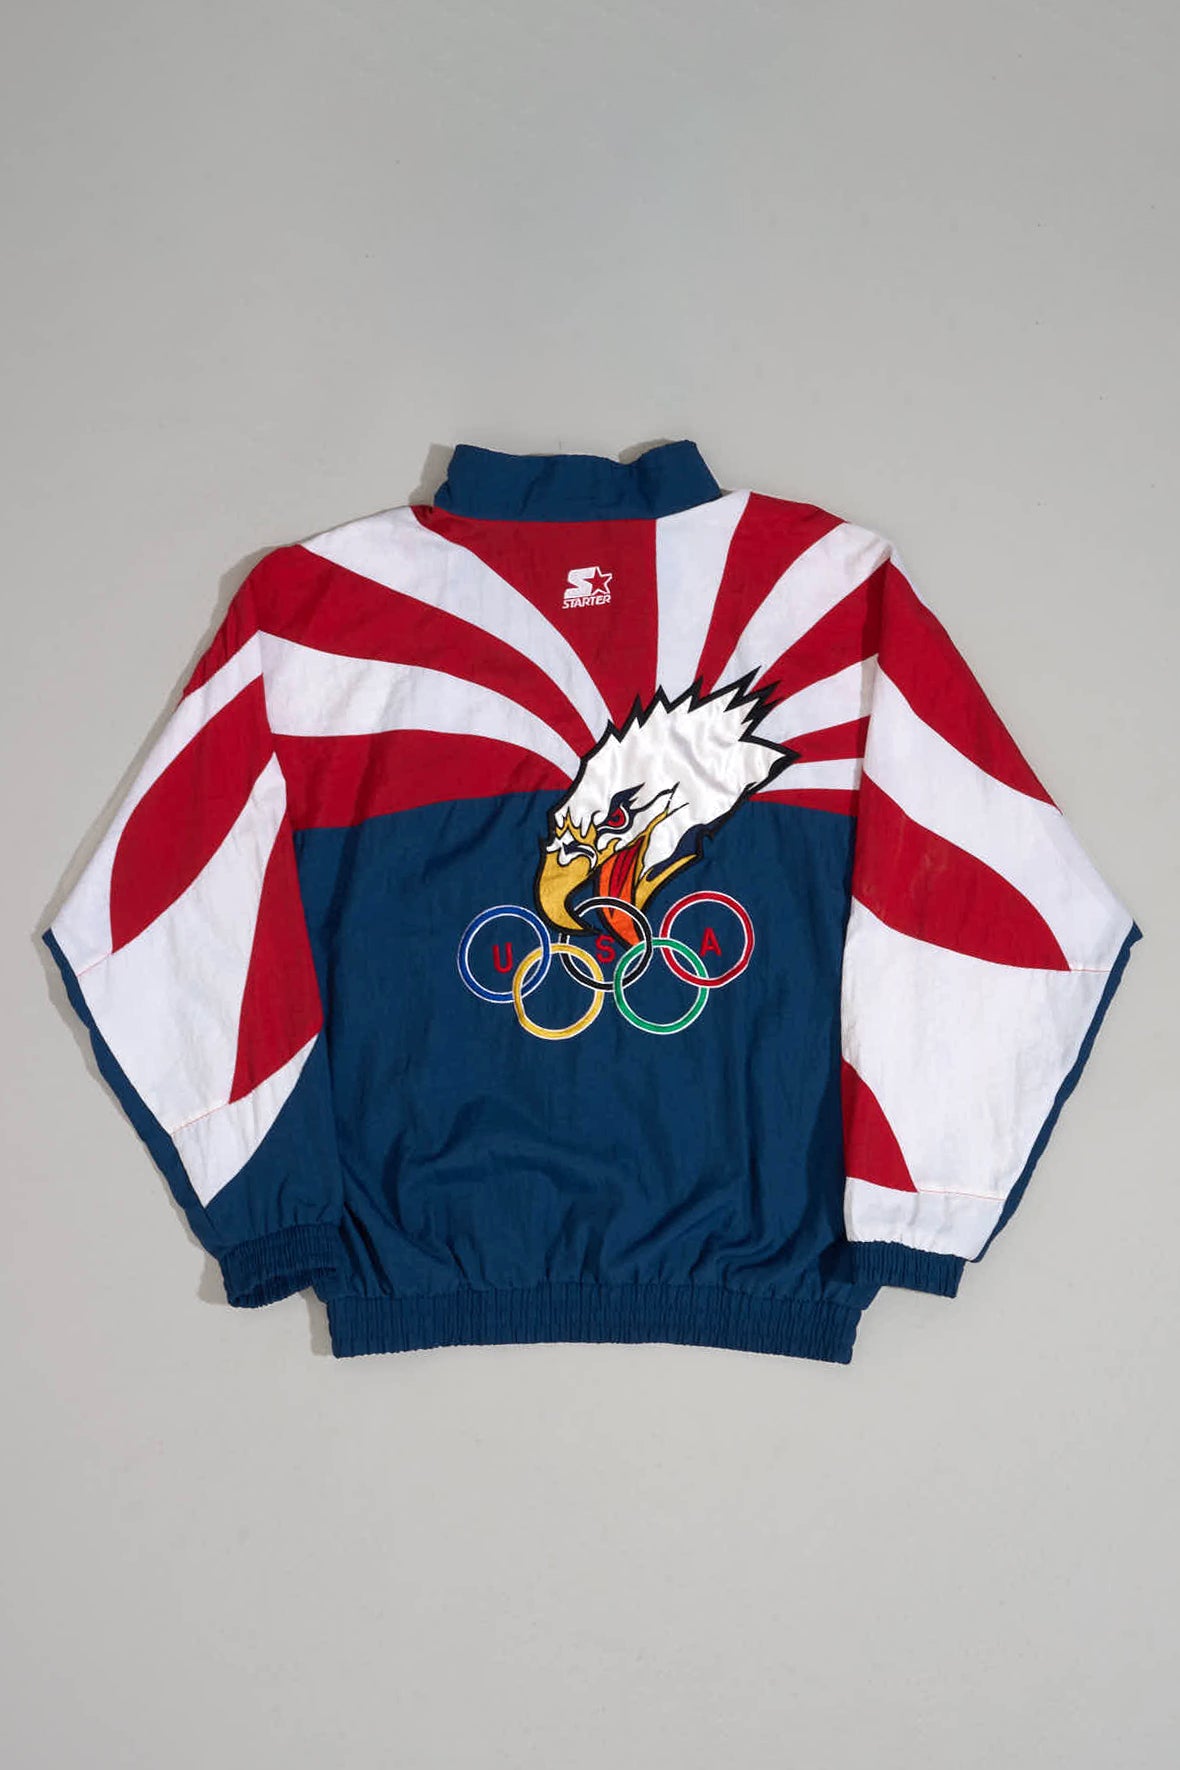 USA OLYMPIC TEAM Jacket - XL